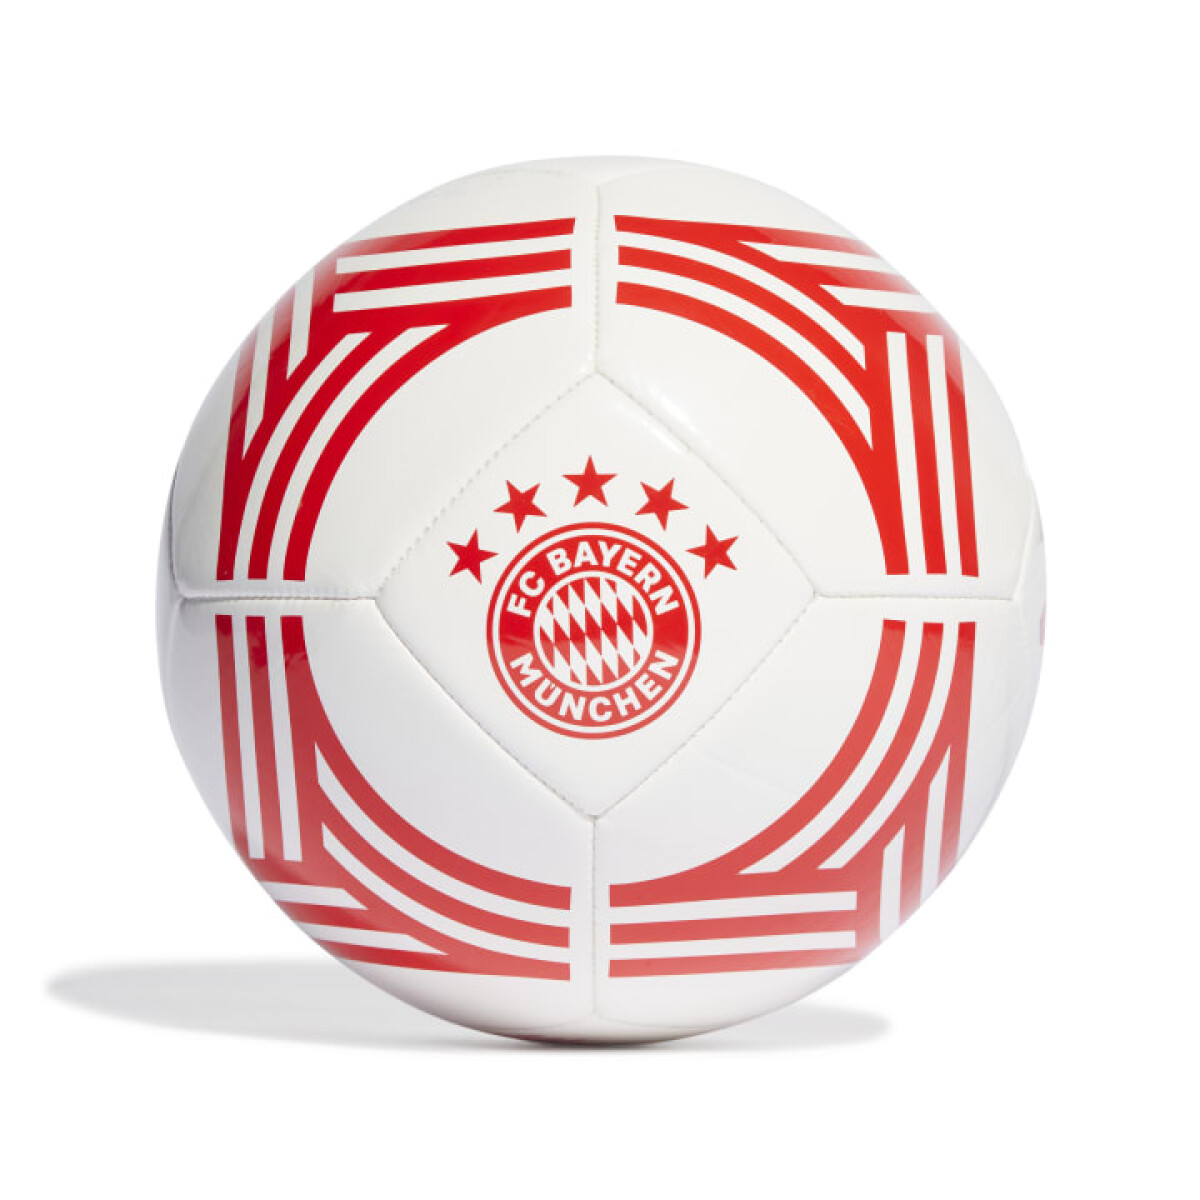 Pelota Adidas Bayern Munich - IA0919 - Blanco-rojo 